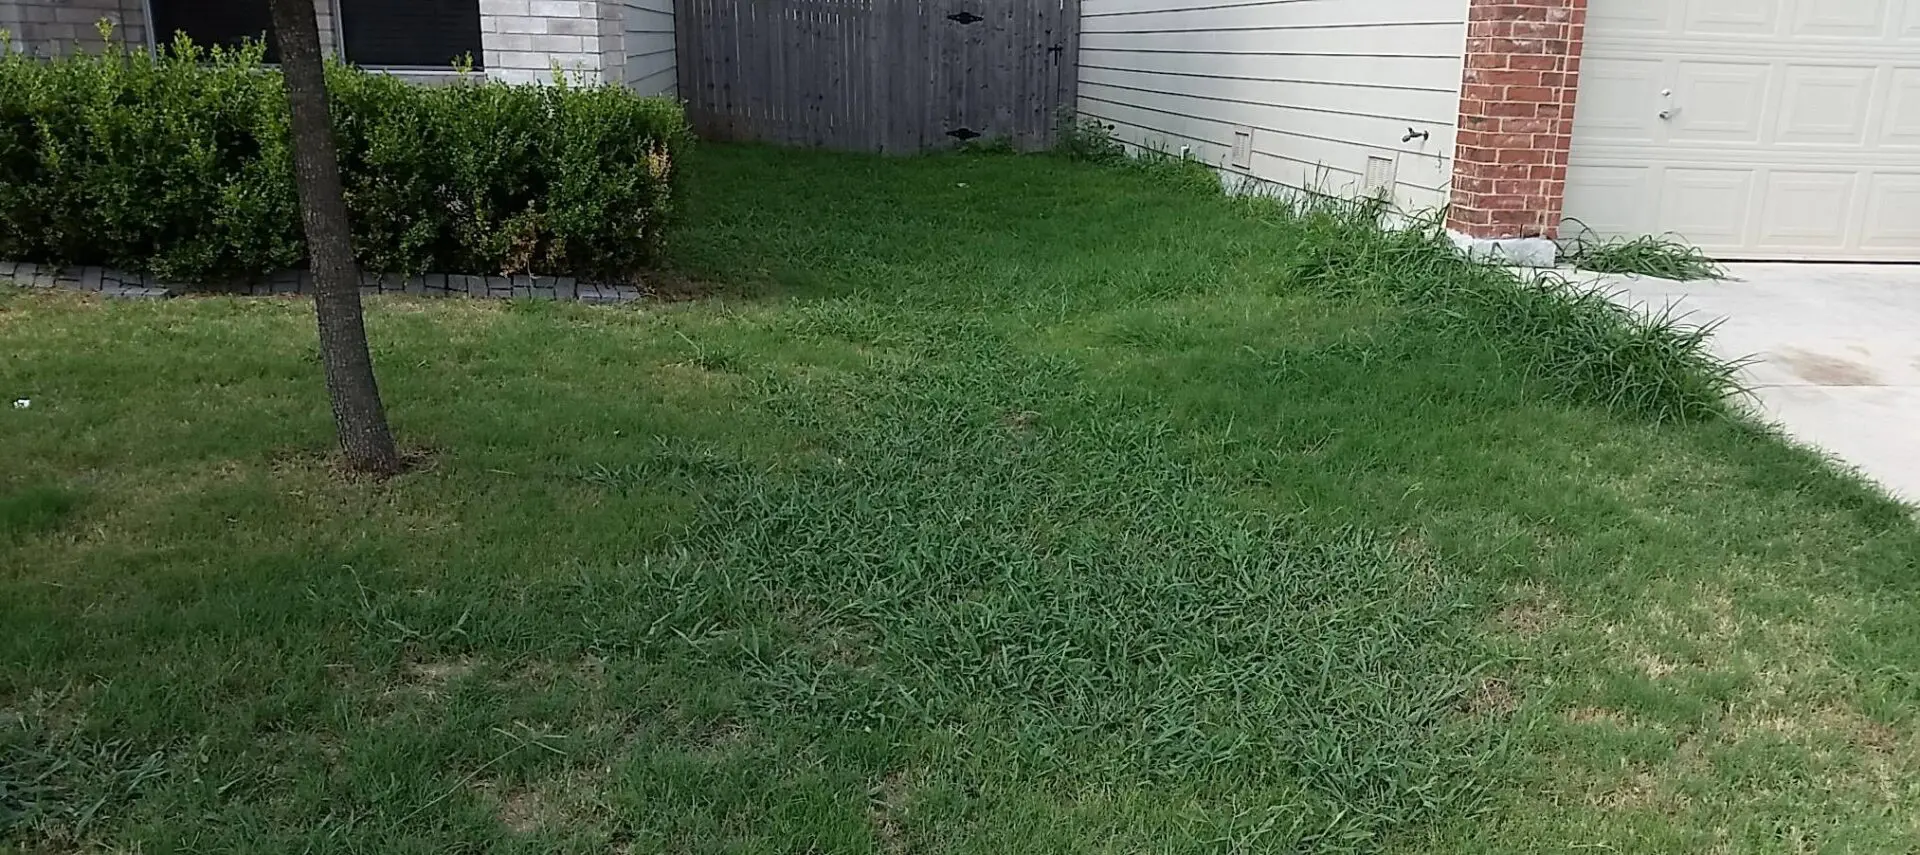 Backyard Lawn for Playing